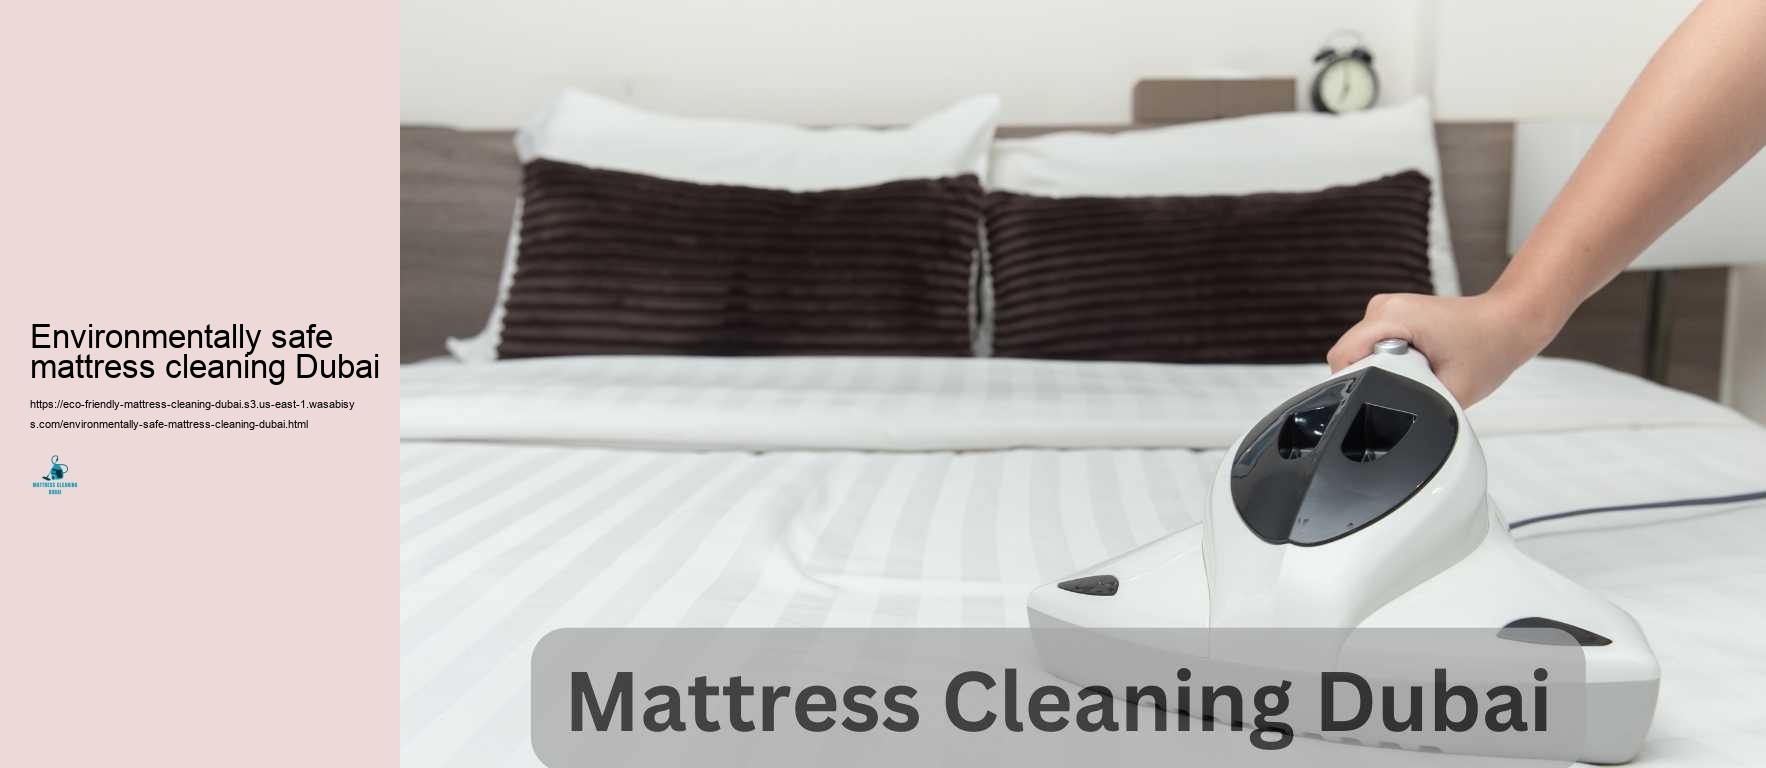 Environmentally safe mattress cleaning Dubai